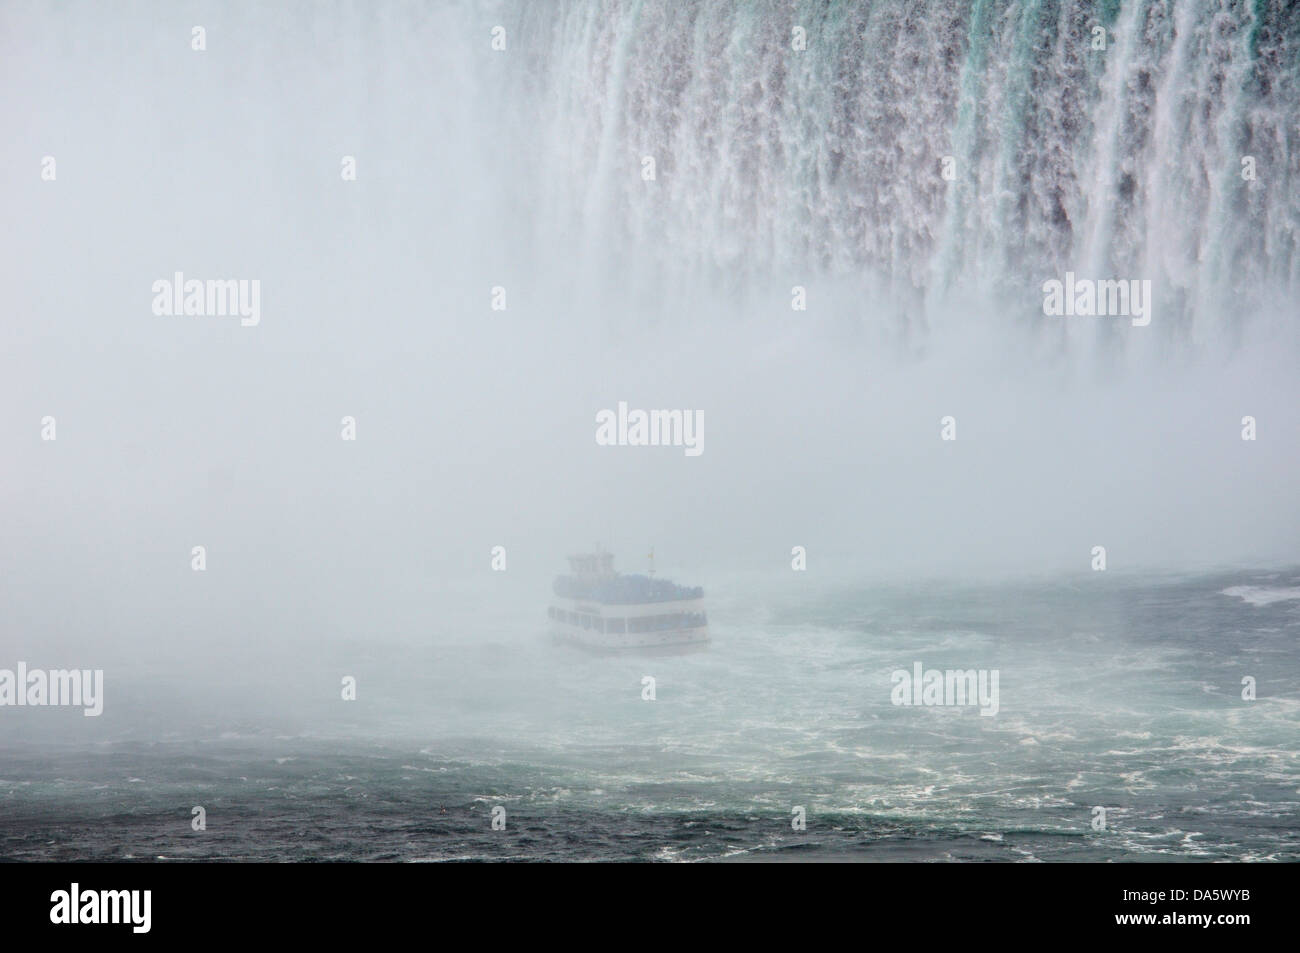 American Falls, Canada, Maid of the Mist, Niagara Falls, water, Niagara River, Ontario, Tour boat, Travel, boat, boat ride, day, Stock Photo